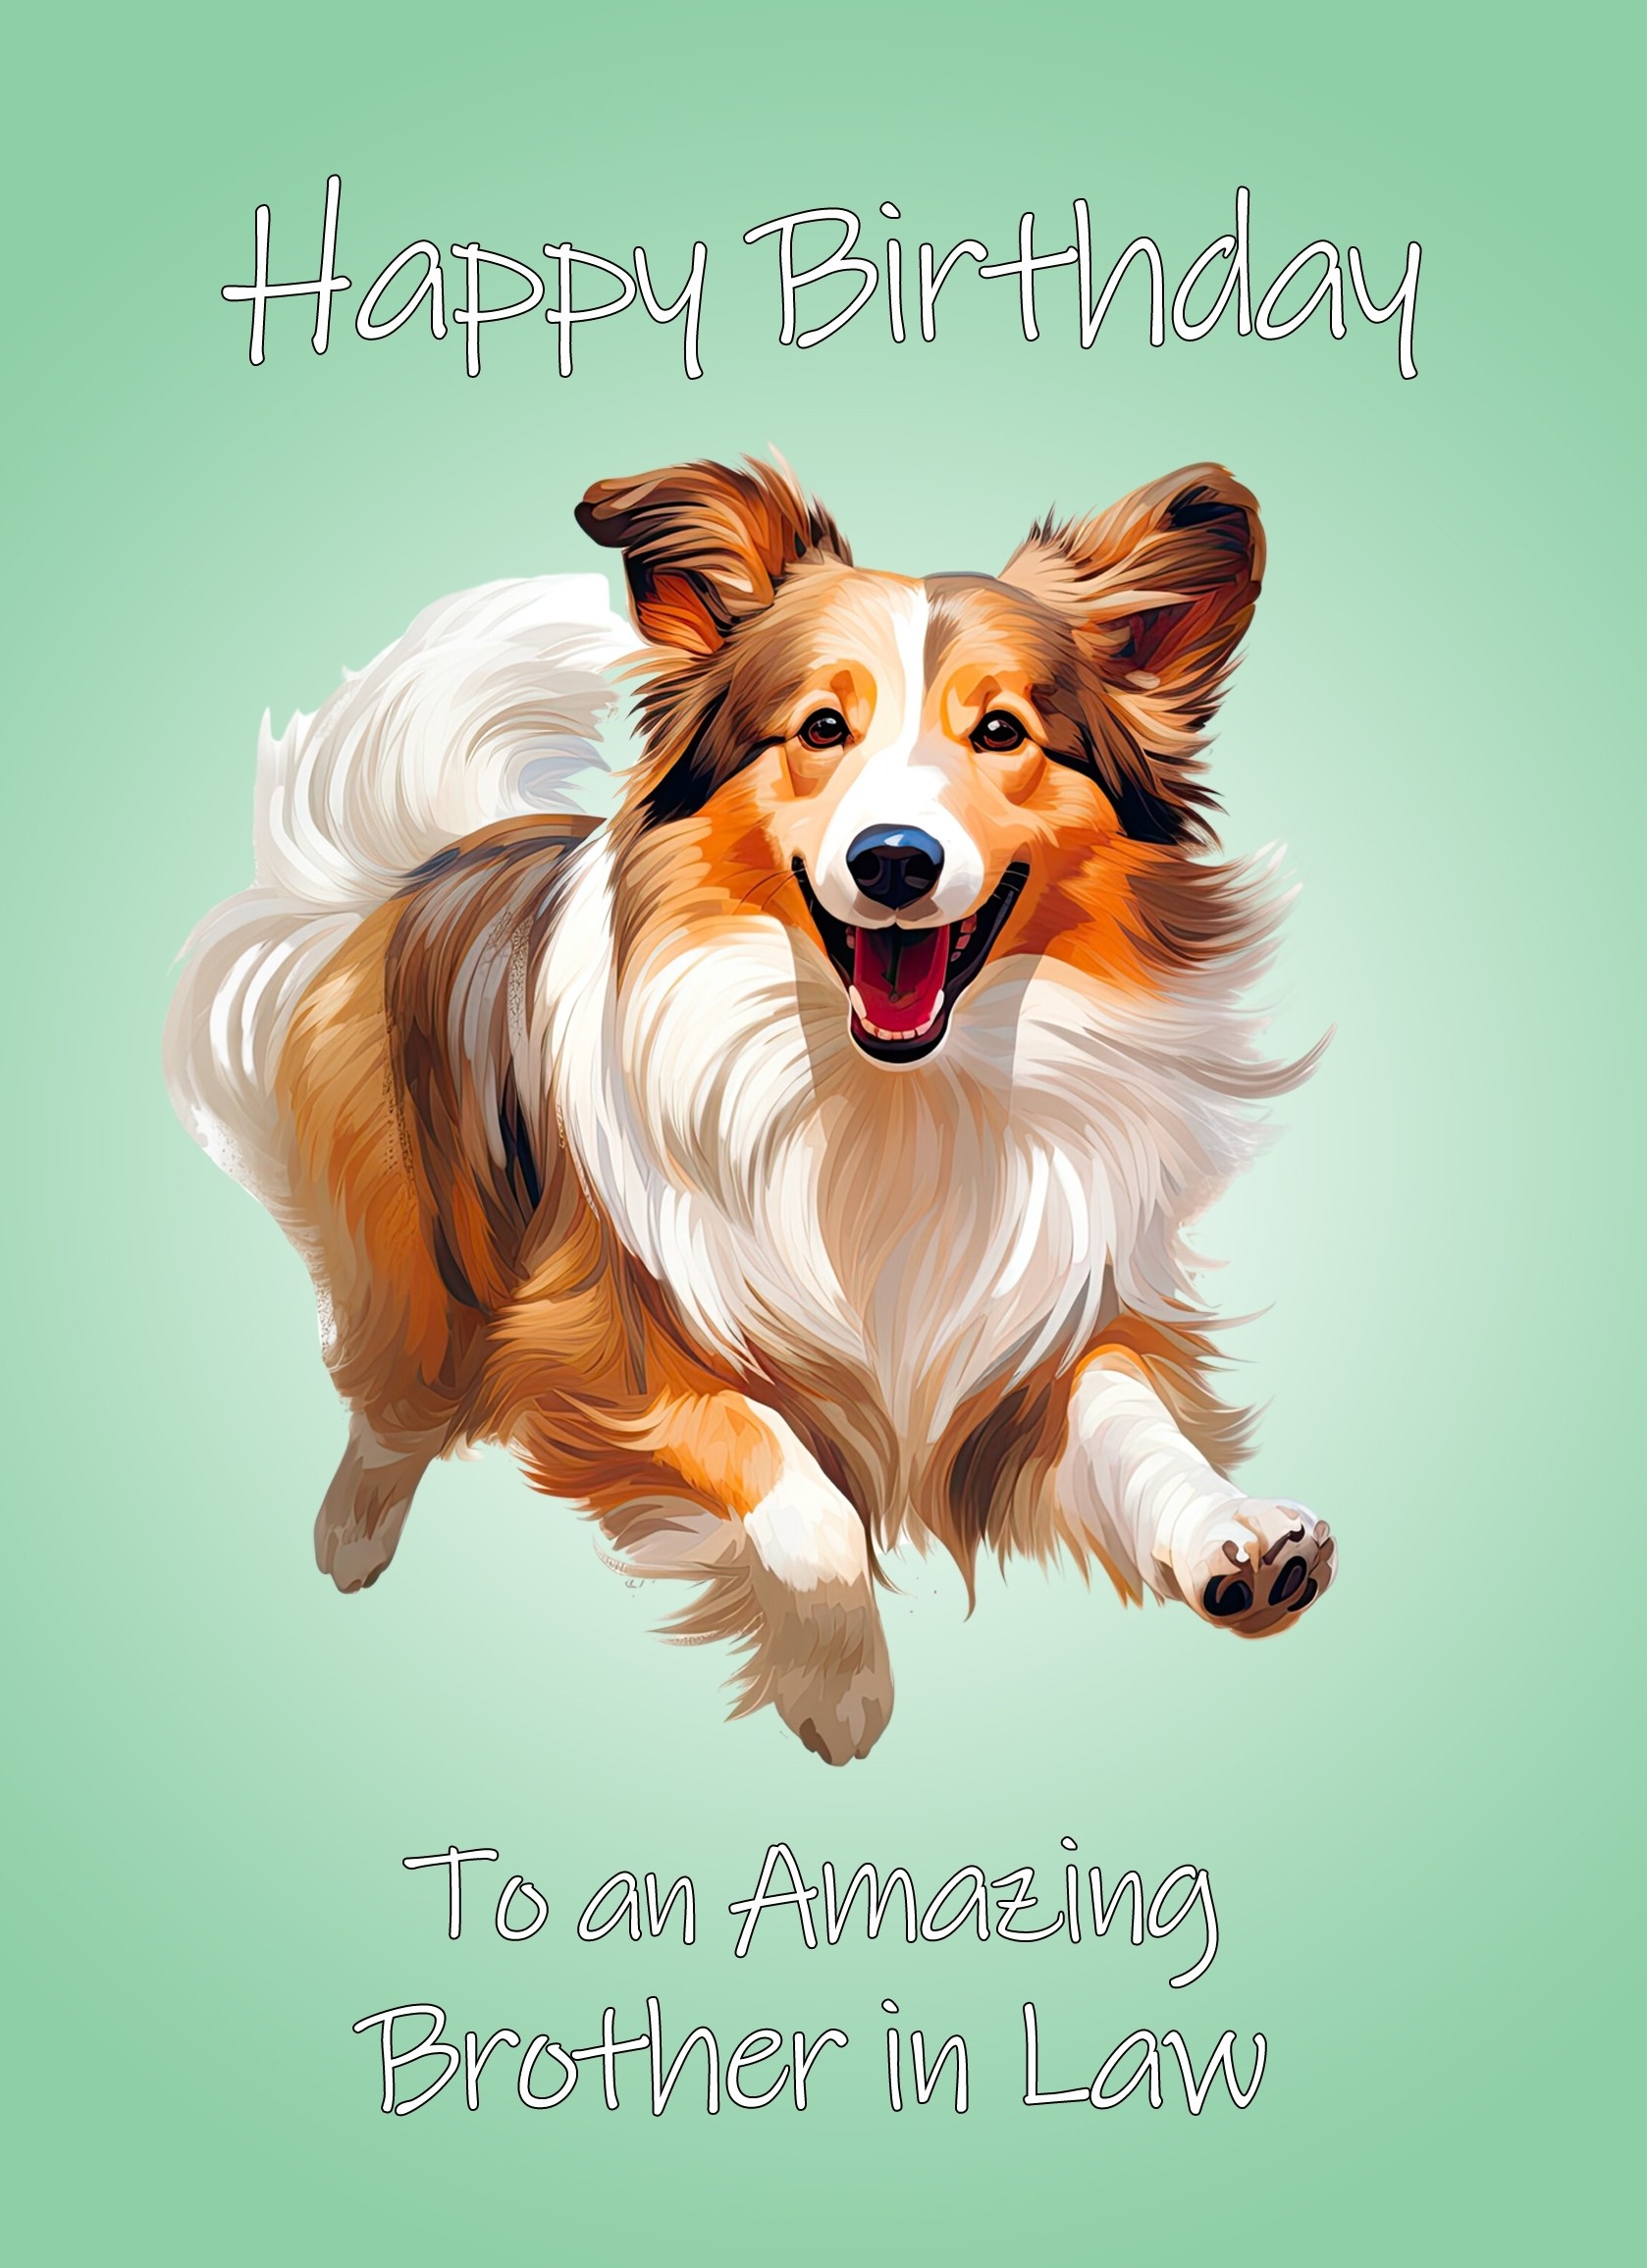 Shetland Sheepdog Dog Birthday Card For Brother in Law